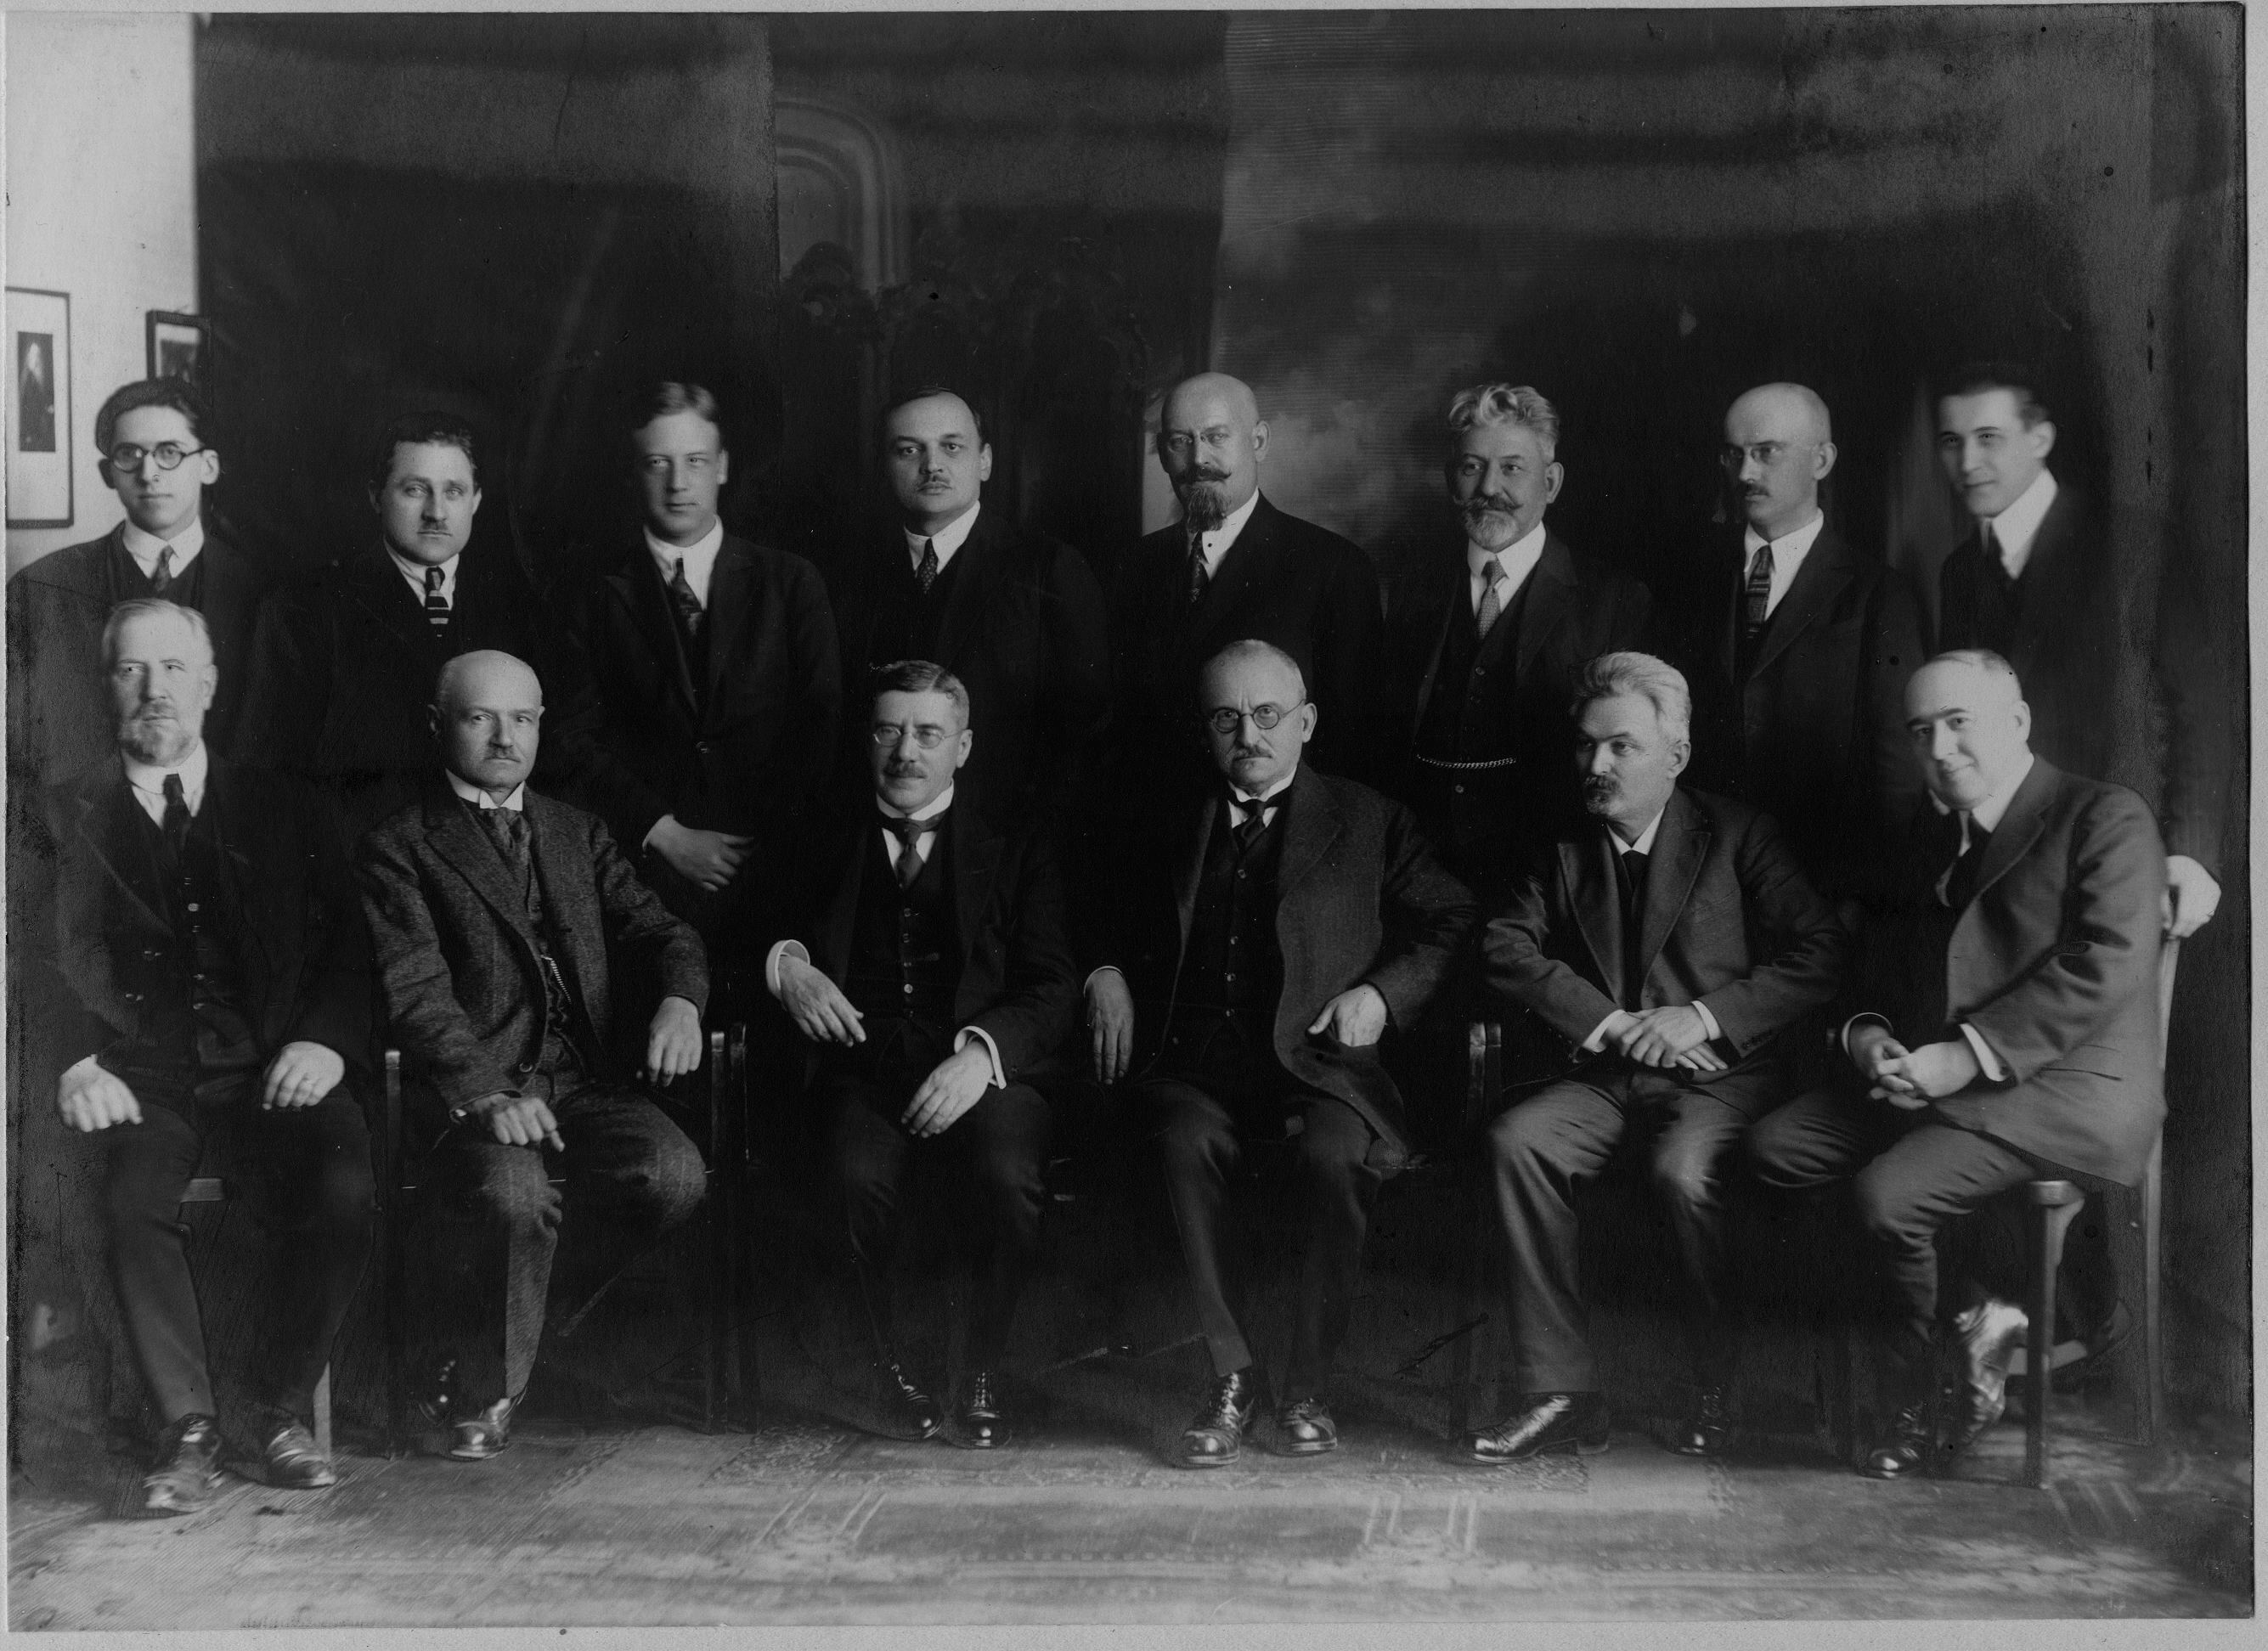 Historical photo: Belgrade Mathematical School 1926. Miloš Radojčić, Tadija Pejović, Vjačeslav Žardecki, Anton Bilimović, Petar Zajankovski, (Jelenko Mihailović, the seismologist), Radivoj Kašanin, Jovan Karamata (standing), Nikola Saltikov, Mihailo Petrović, (Pavle Popović, the chancellor), Bogdan Gavrilović, (K. Petković, the chancellor of the Faculty of Philosophy), Milutin Milanković (sitting). (SASA Archive, 14197/16)